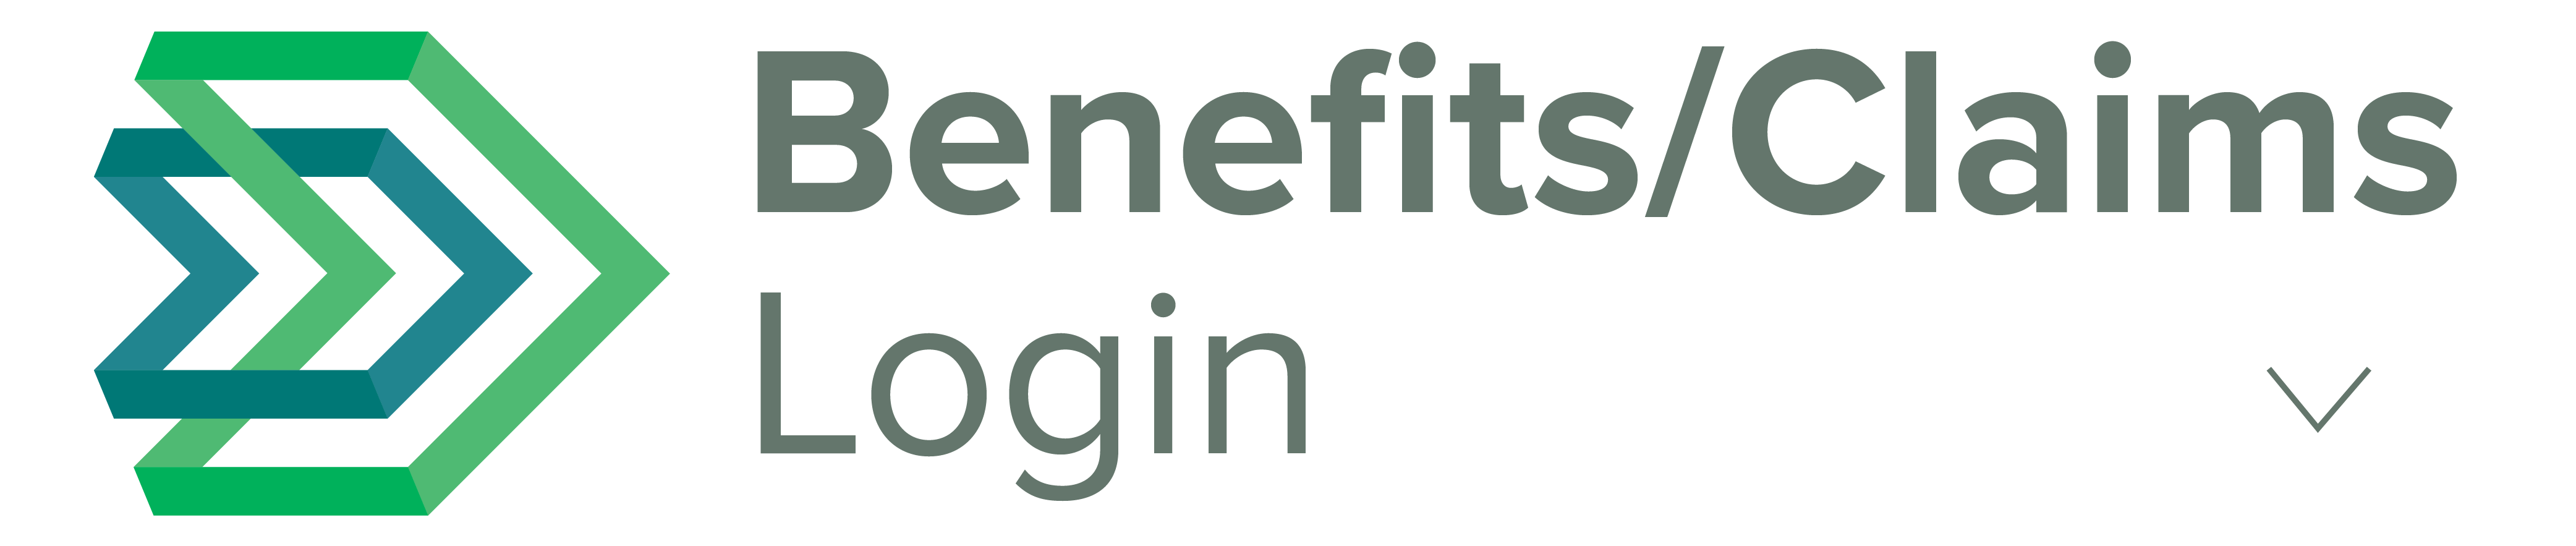 Benefits/Claims Login